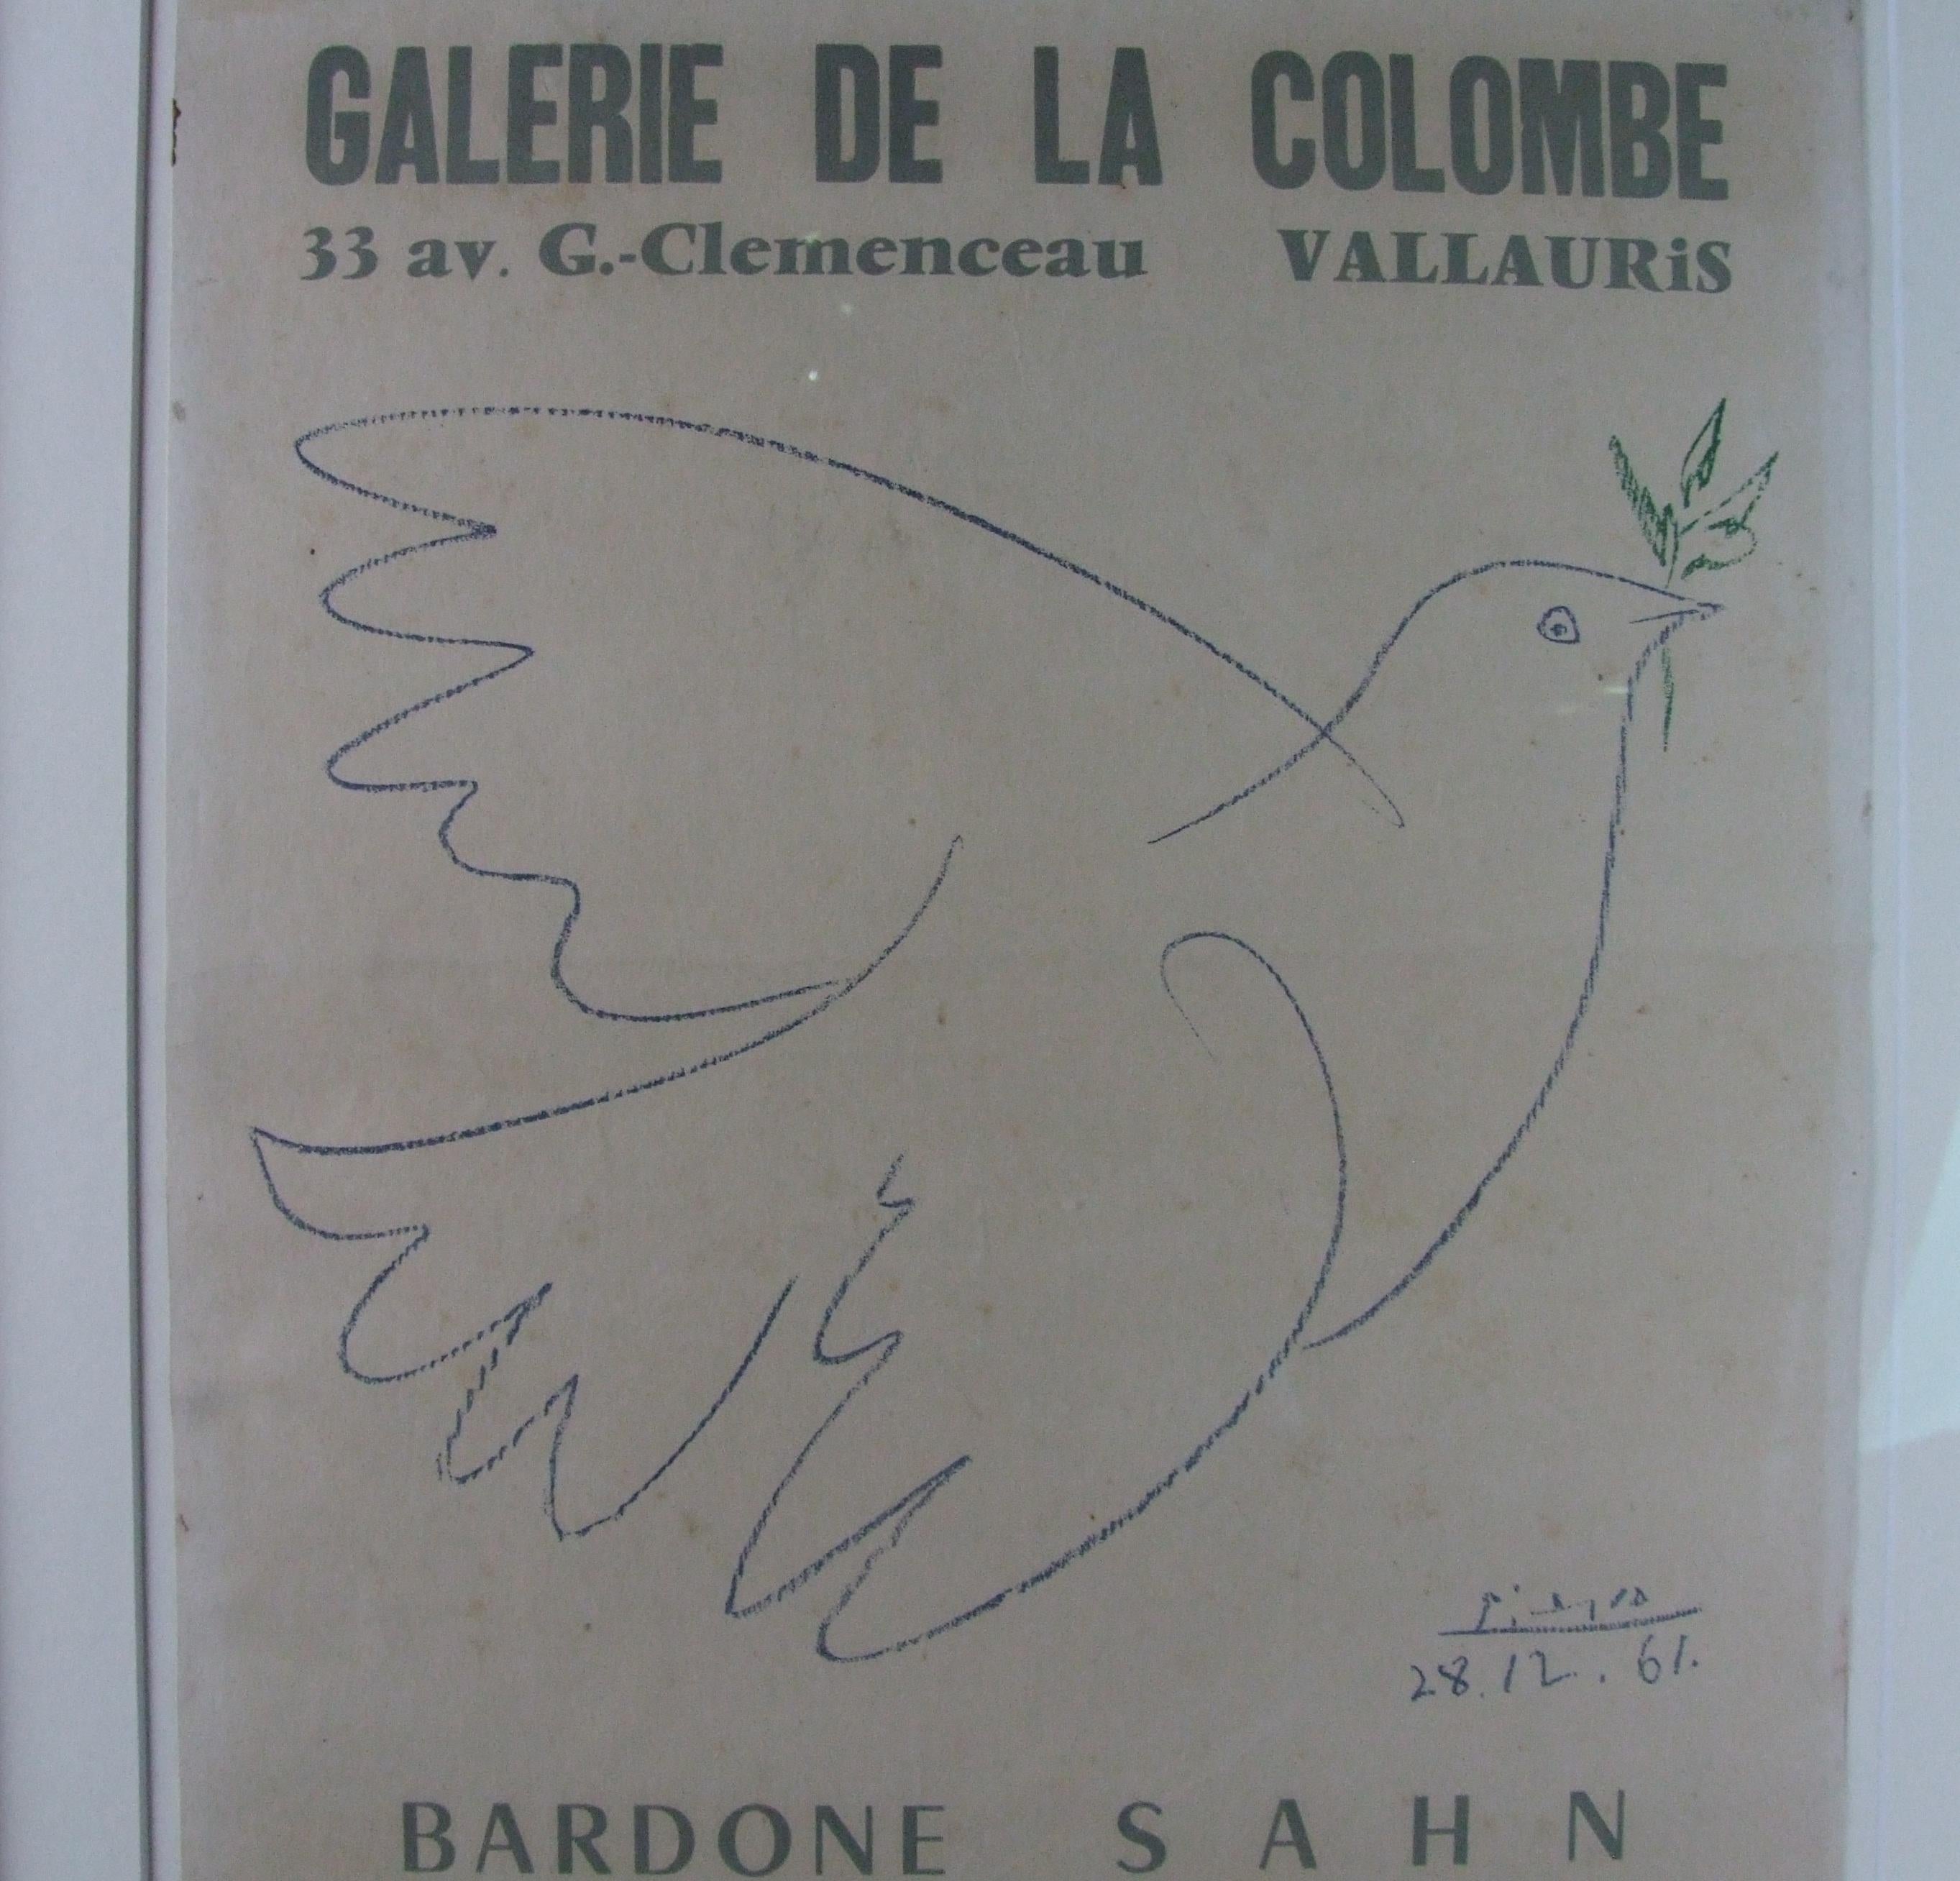 Galerie de la Colombe, 1961 - litograph, 48x32 cm., framed - Print by Pablo Picasso